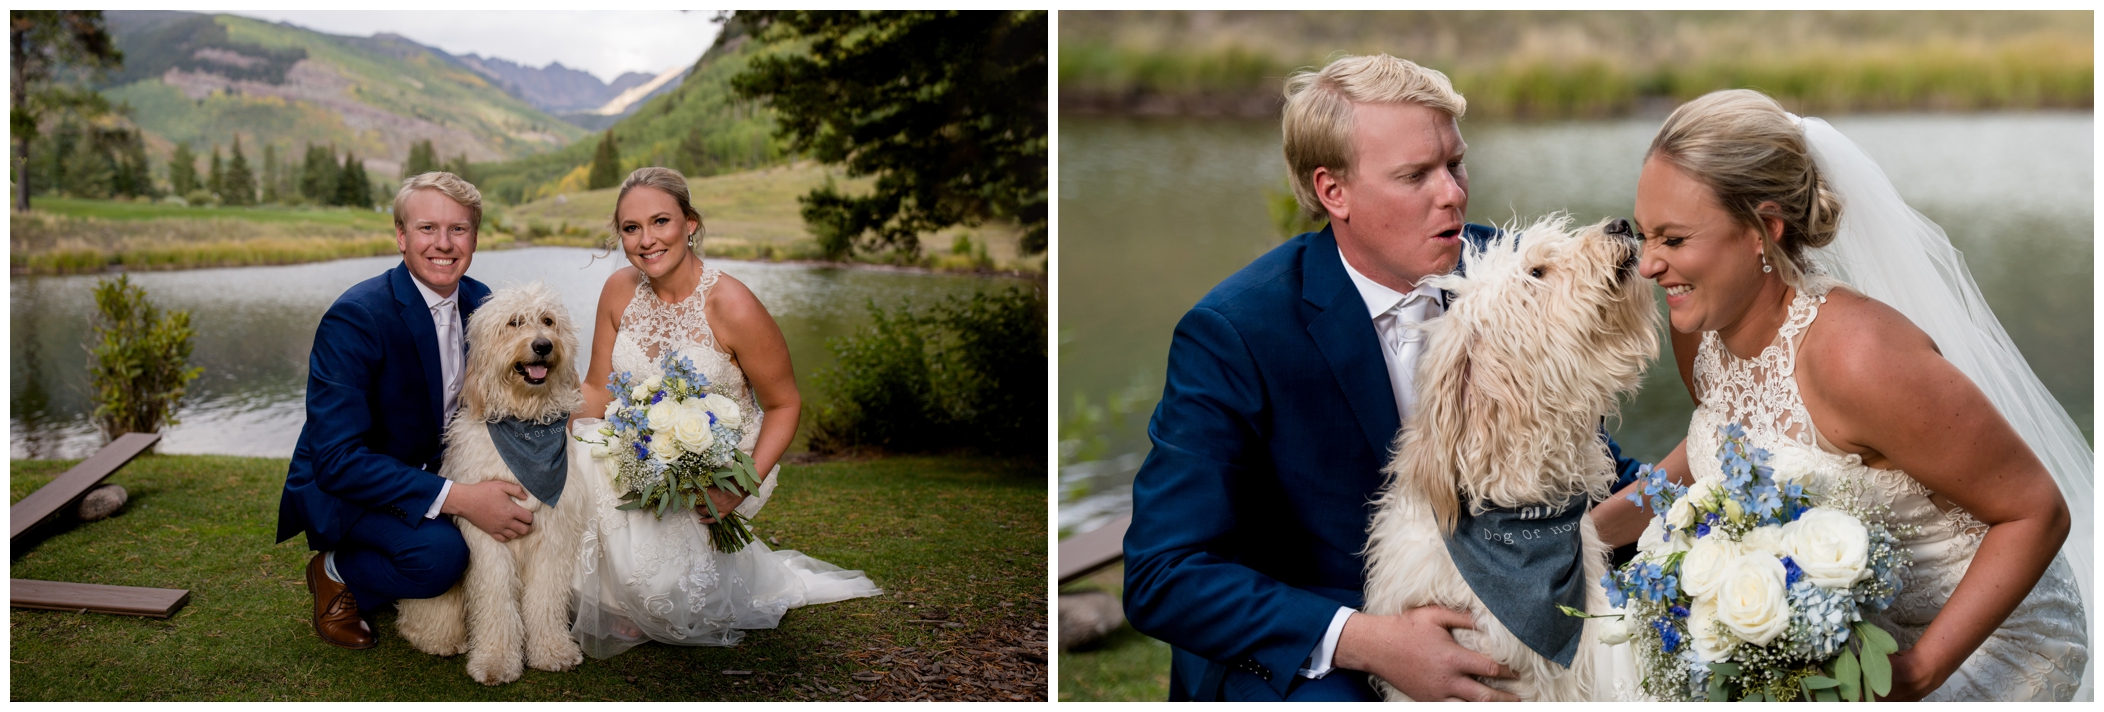 Vail wedding photos with dog ring bearer 